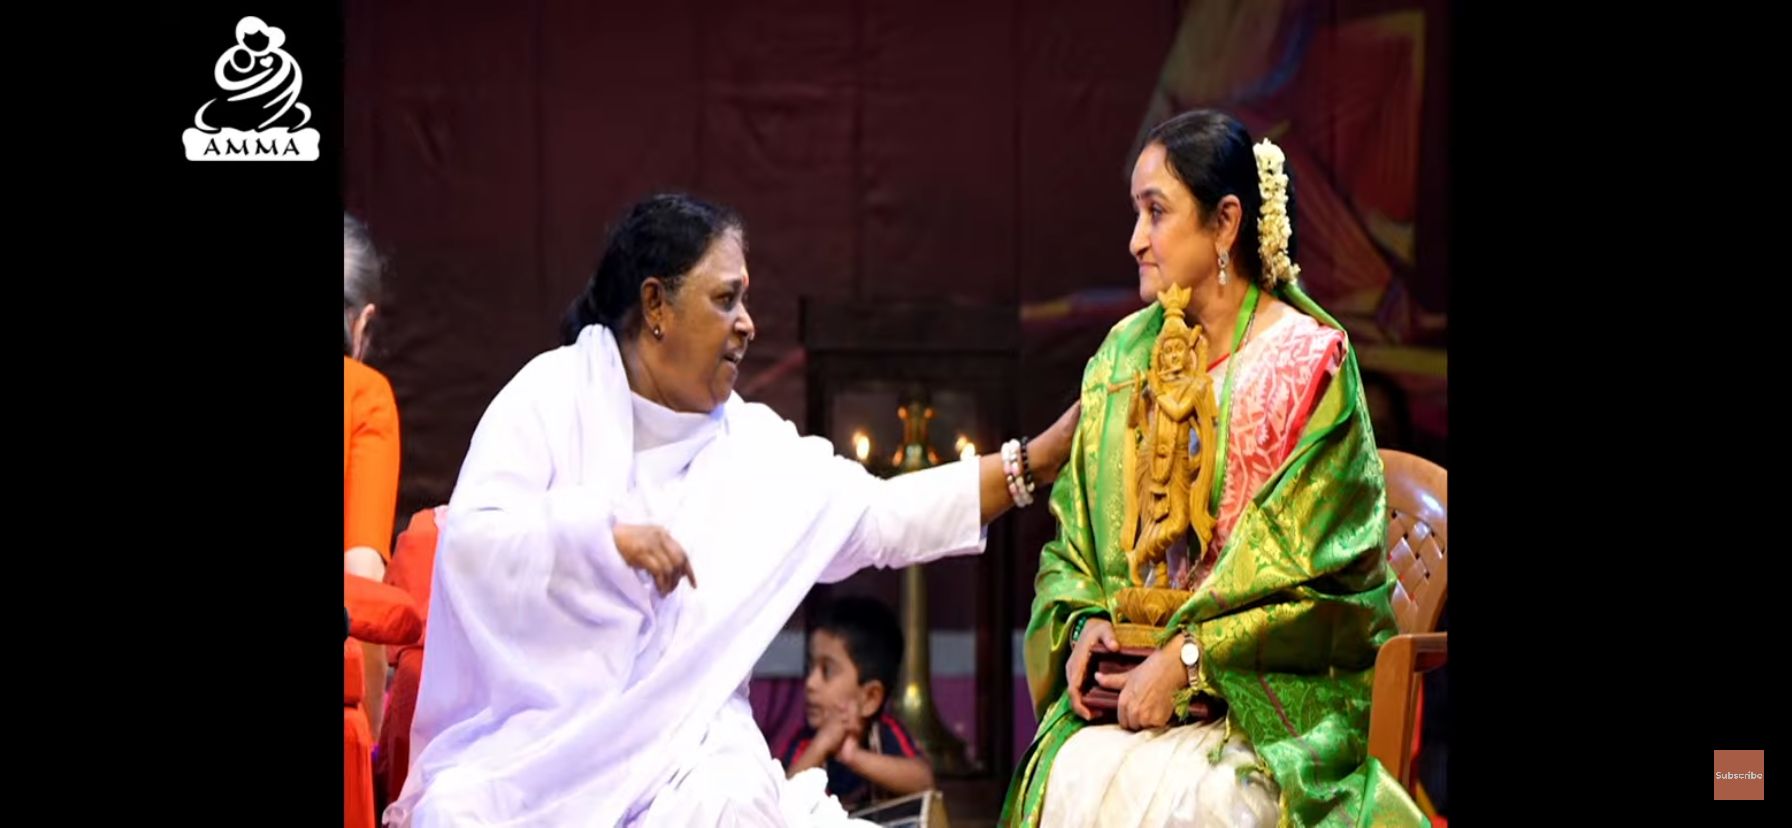 Mata Amritanandamayi with Dr. Sandhya Purecha